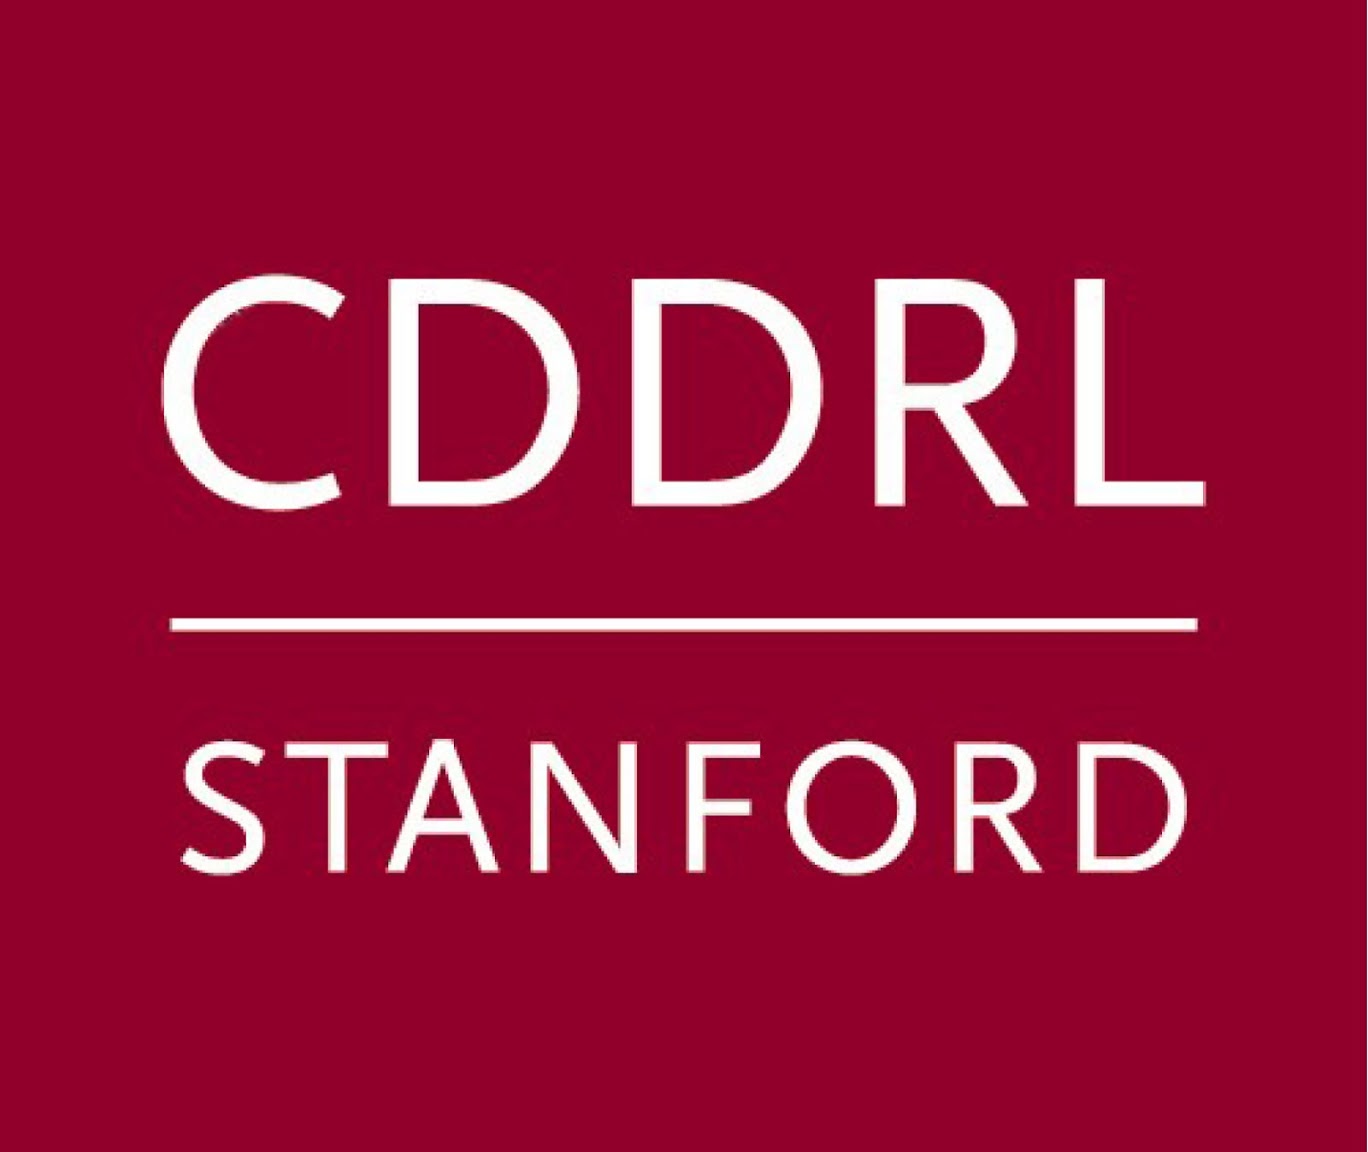 CDDRL Logo HiRes.jpg